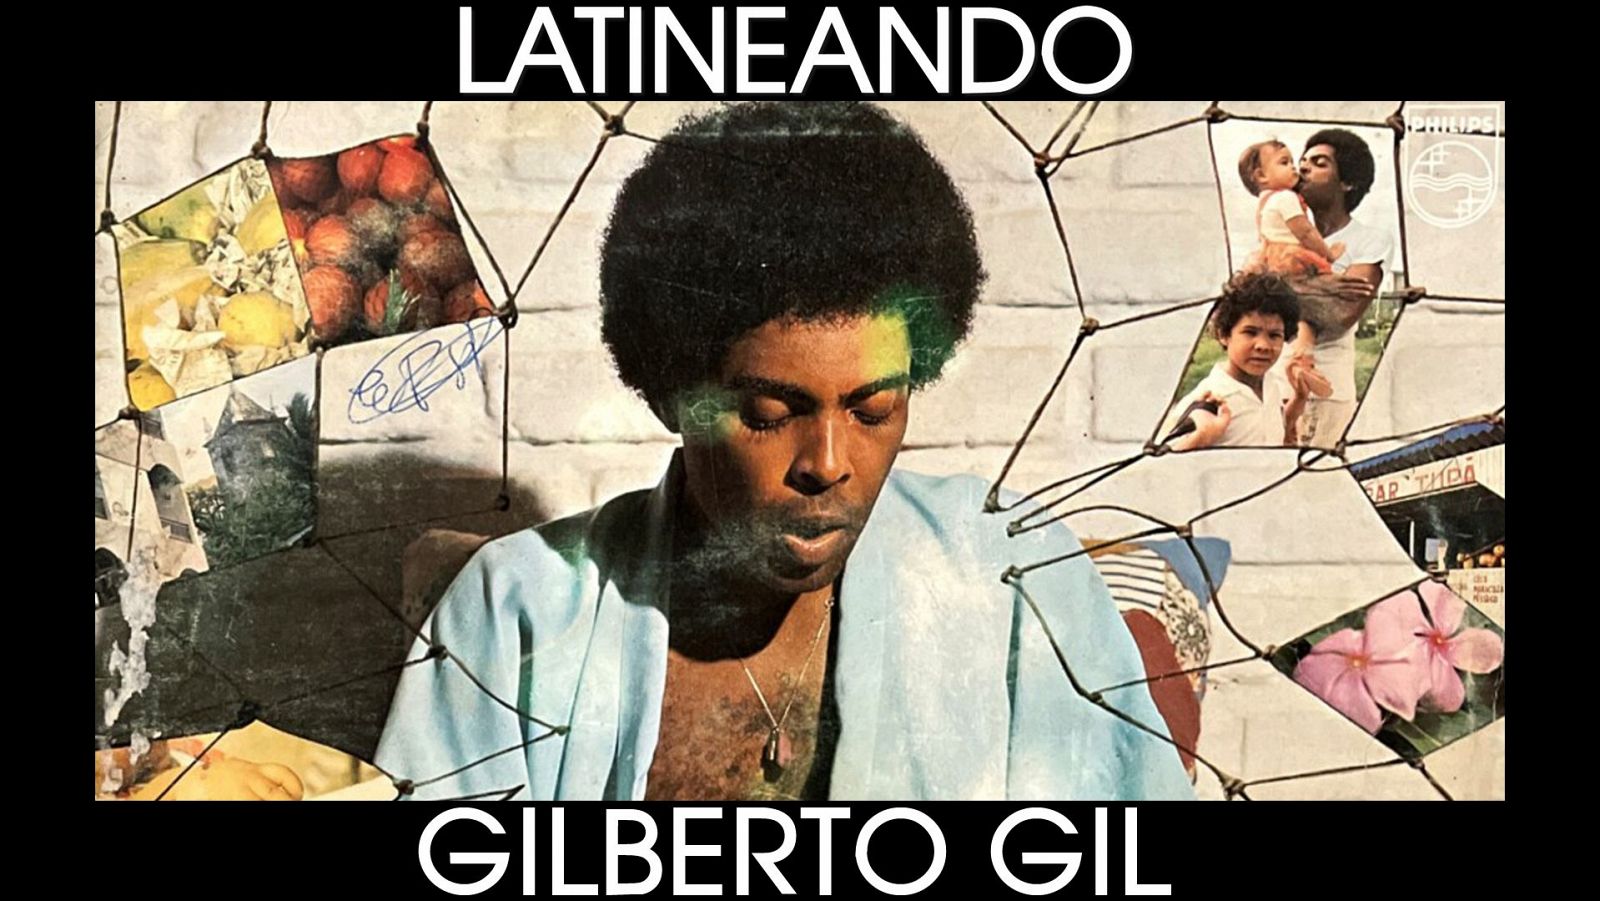 Latineando - Gilberto Gil